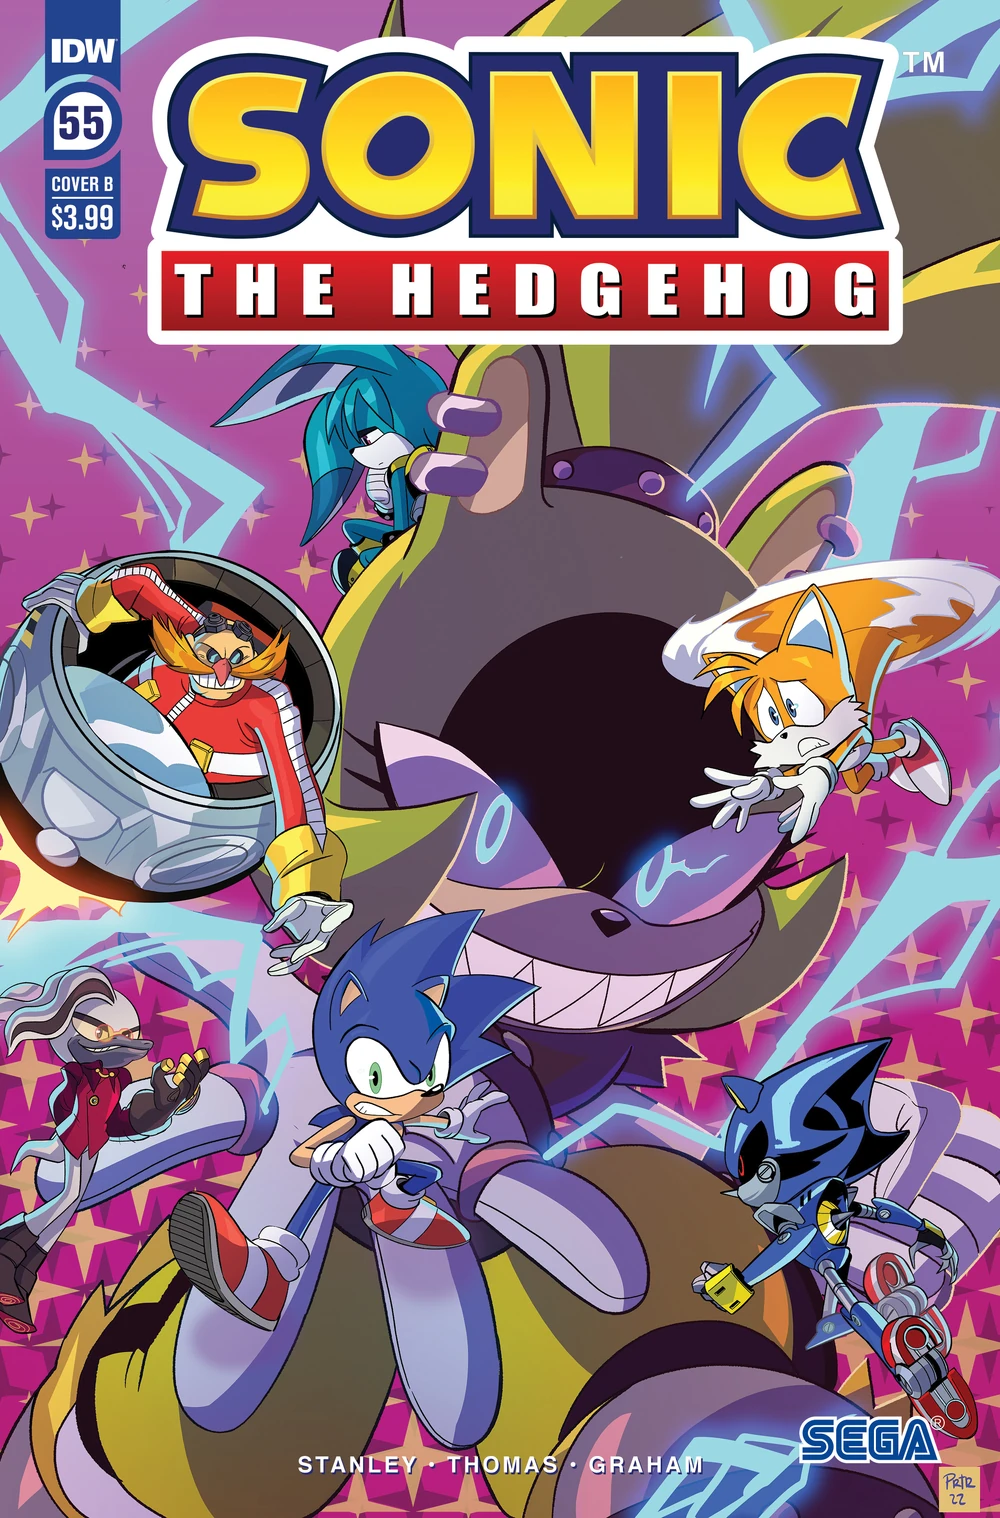 Sonic The Hedgehog #55 Cover B